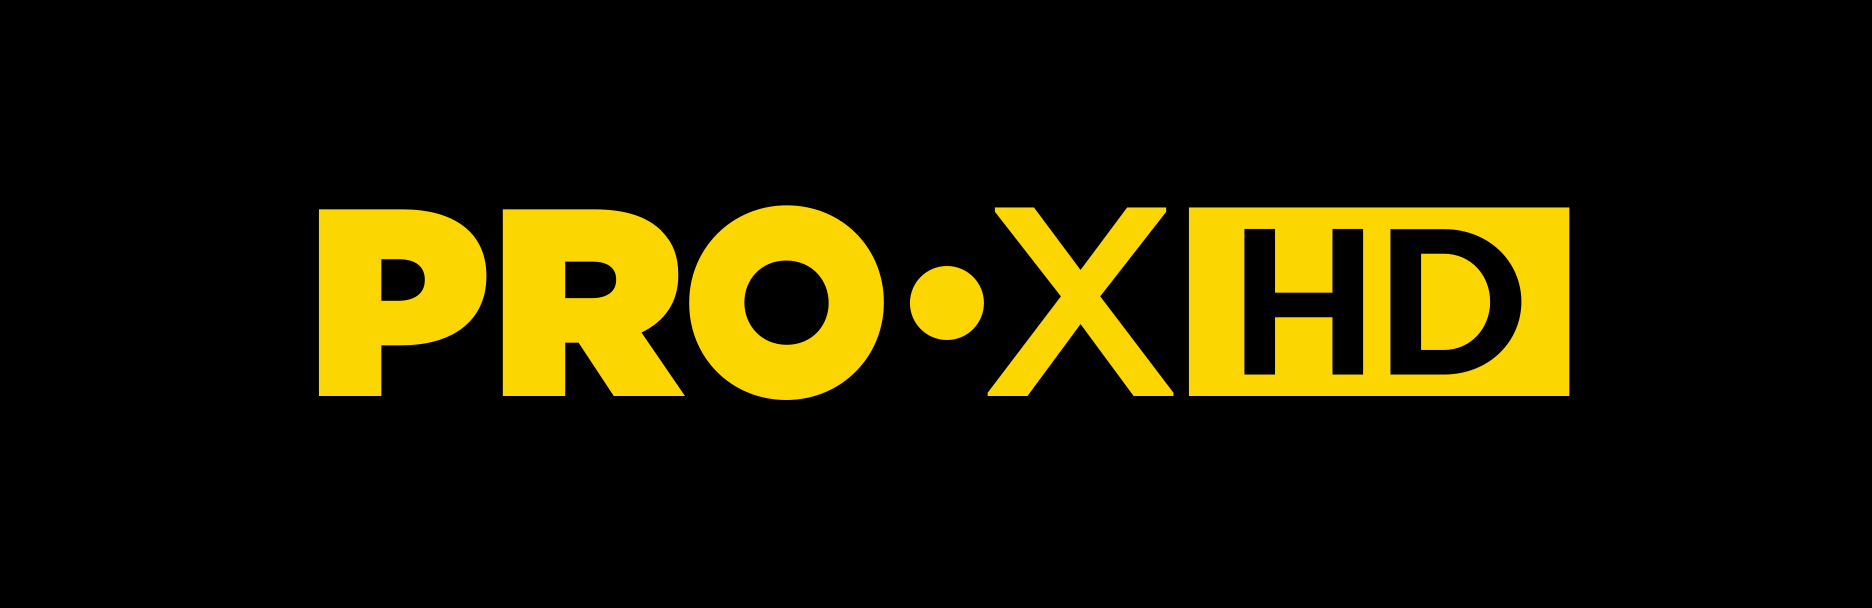 Pro X Hd Logo 2017.png - X, Transparent background PNG HD thumbnail